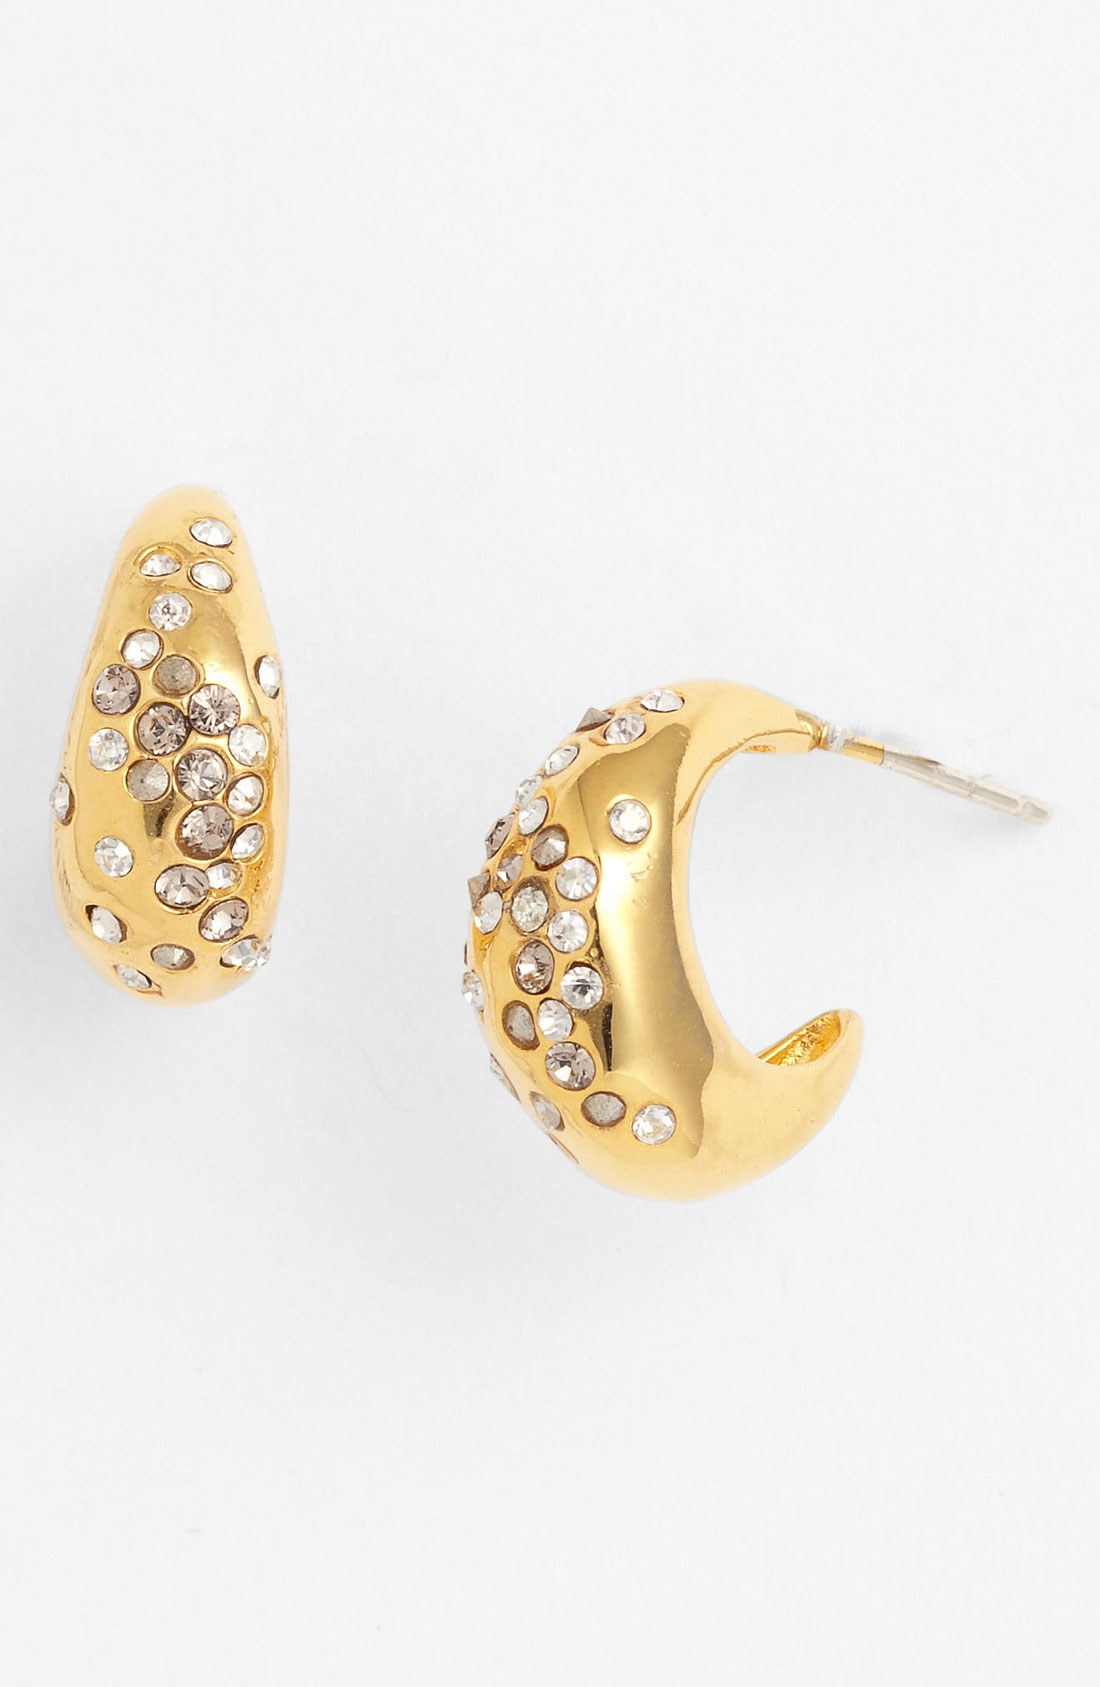 Alexis Bittar Miss Havisham Small Hoop Earrings in Gold | Lyst